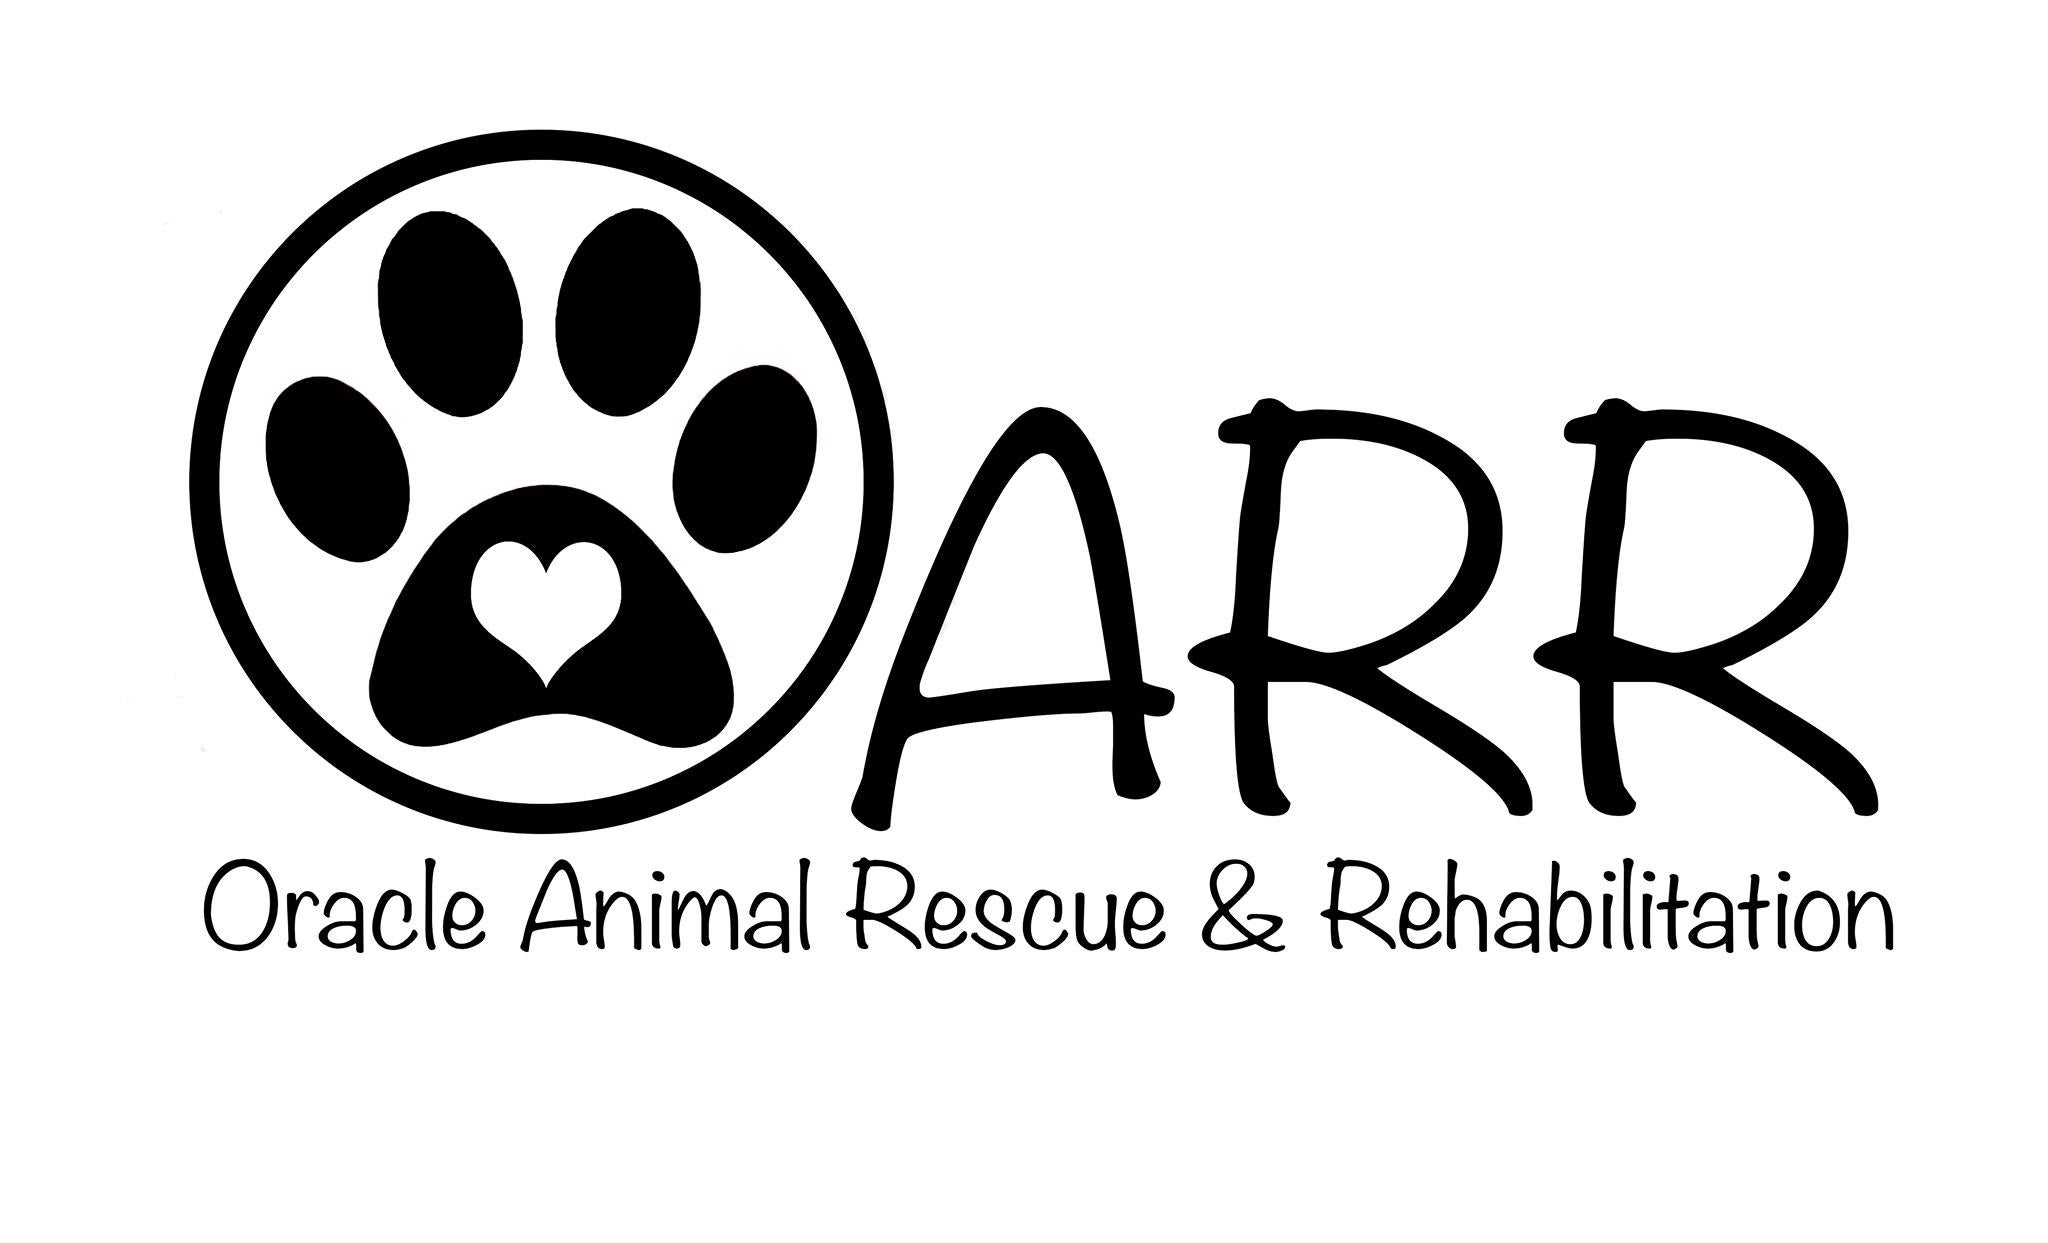 Oracle Animal Rescue and Rehabilitation Inc., Oracle, Arizona